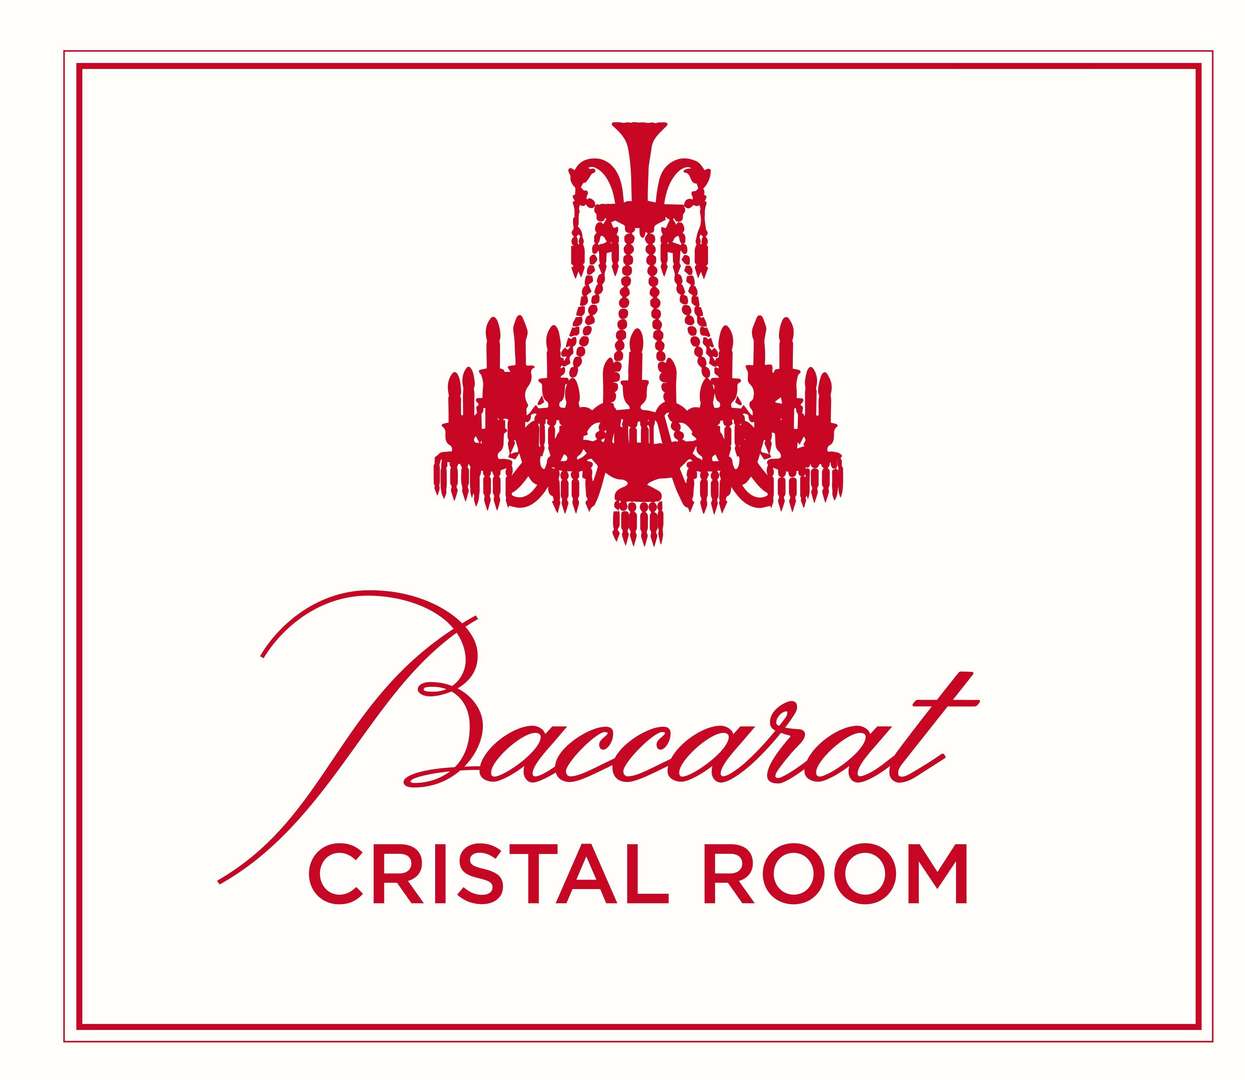 baccarat-cristal-room-logo-3